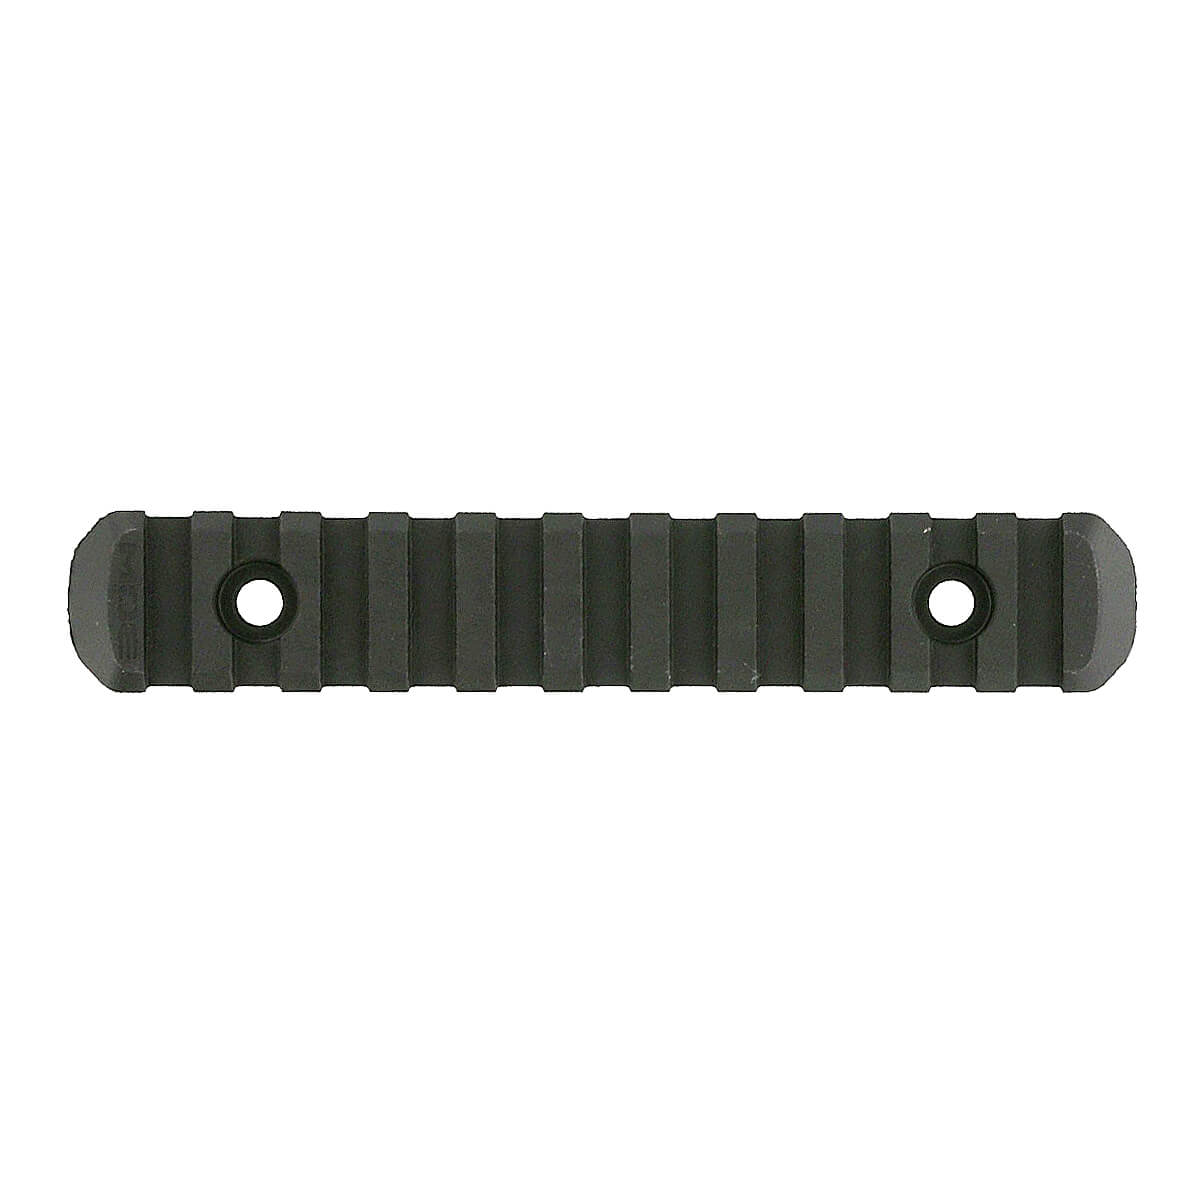 Polymer Rail Section L5-11 Slot MAG409 MAG 409 BLACK BLK NEW Magpul 